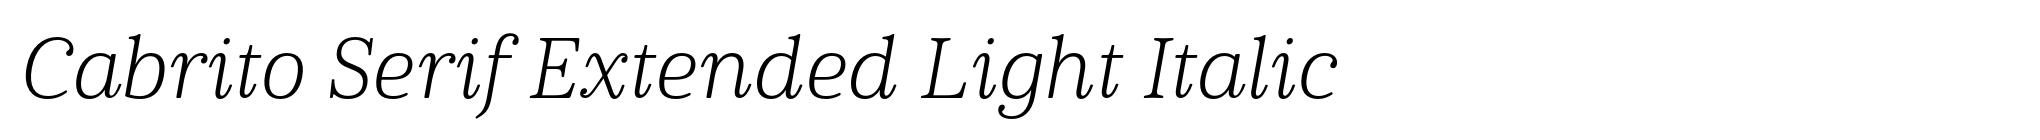 Cabrito Serif Extended Light Italic image